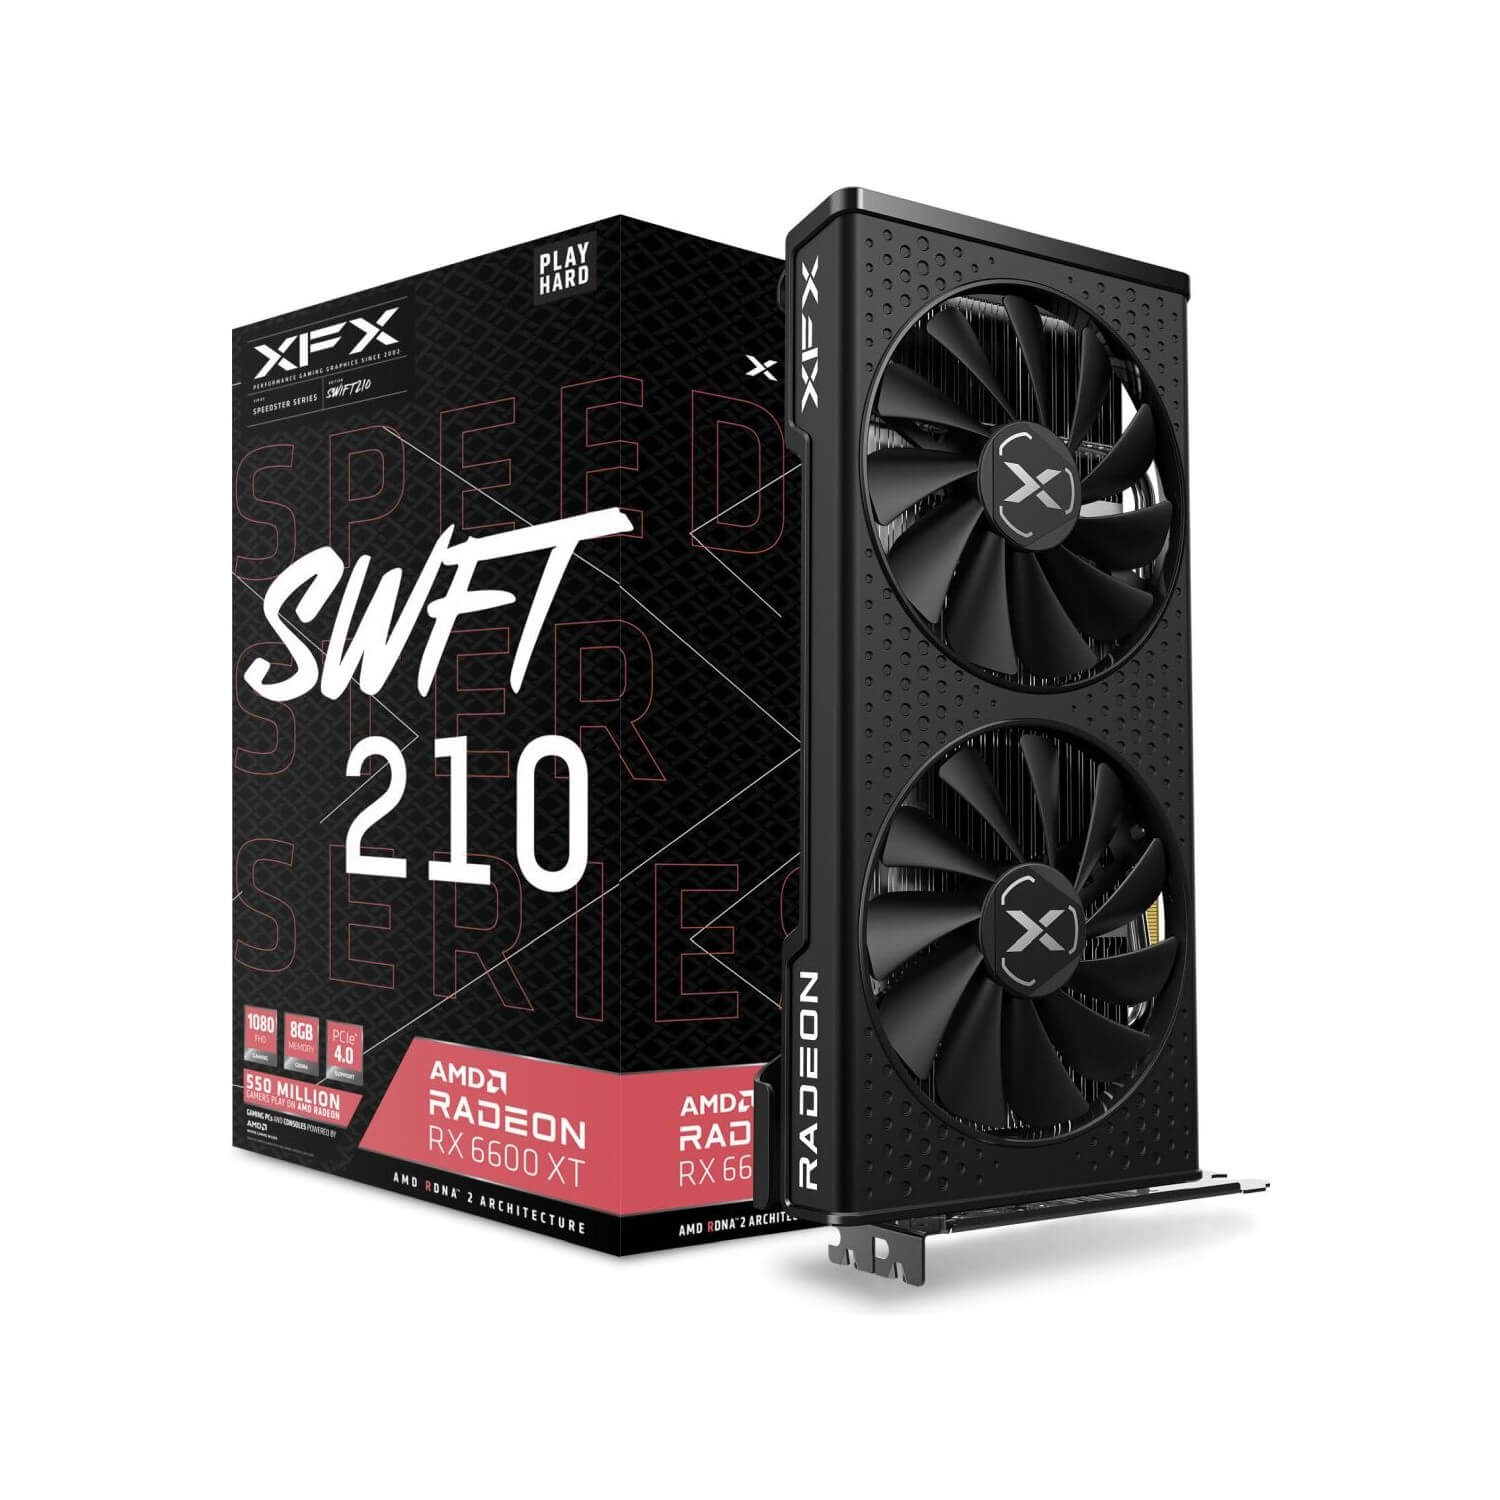 Видеокарта Xfx Speedster Swft 210 AMD Radeon RX6600XT 8GB (RX-66XT8DFDQ) цена и фото